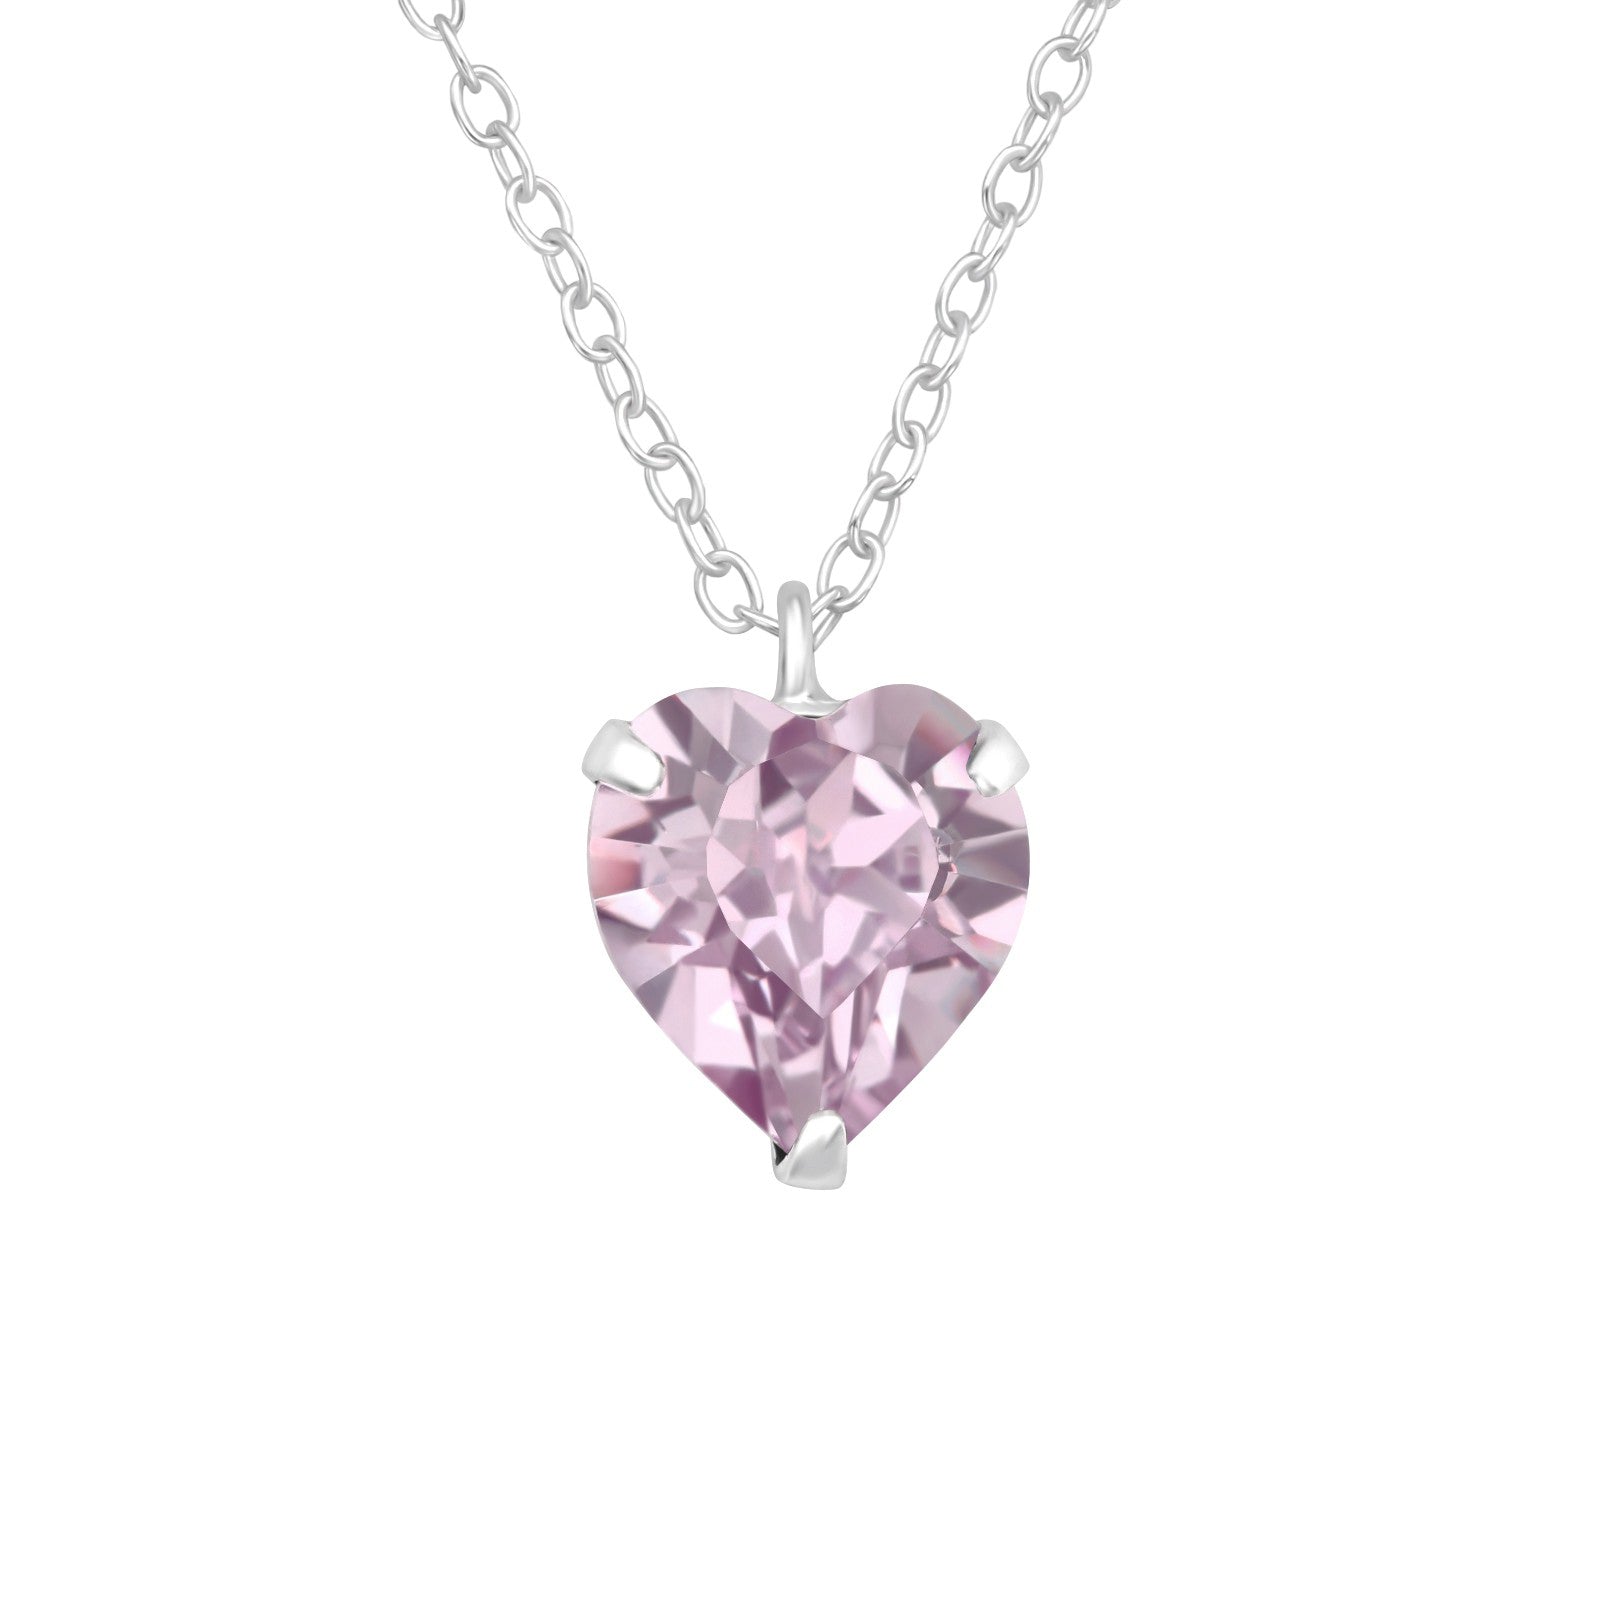 Colier Purple Heart, argint 925 lantisor perla > lantisor diamond > pandantiv > lant argint > argint > cadorui pentu ea > cadouri fete > cadouri fata > cadouri prietena > cadouri bestfriend > idei de cadouri > cadouri iubita Maison la Stephanie   